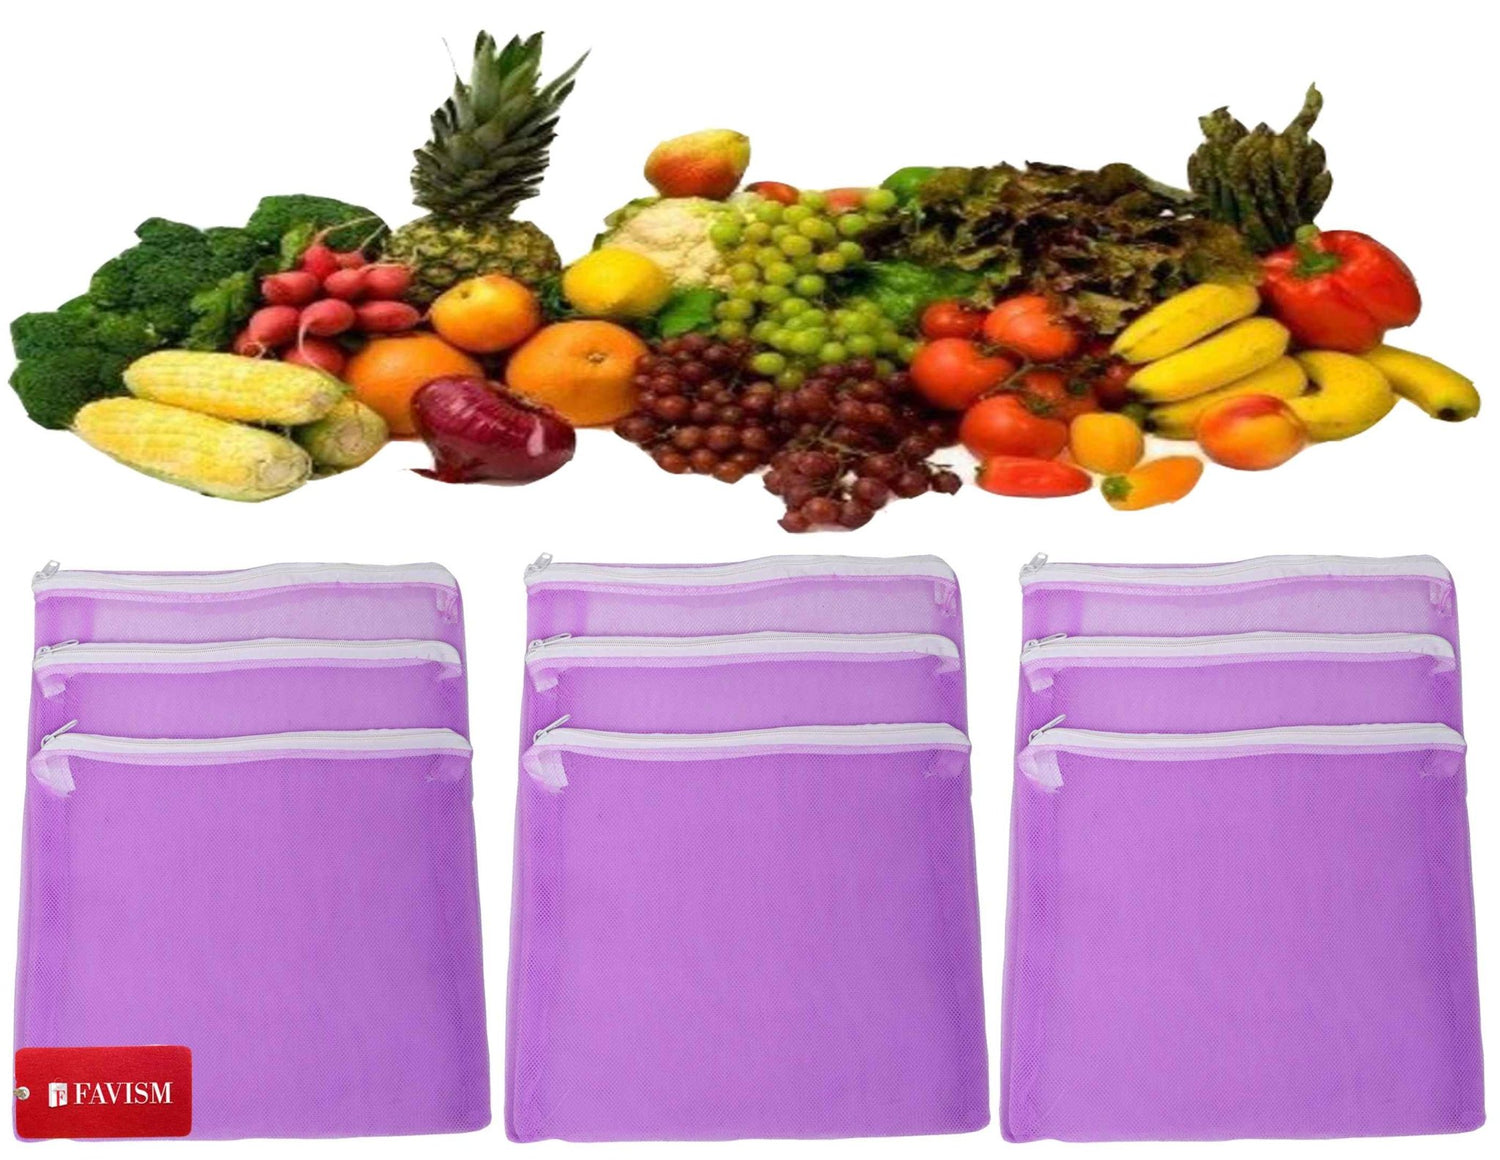 Reusable fruits bags | vegetables grocery bags pack of 9 pcs. - FAVISM